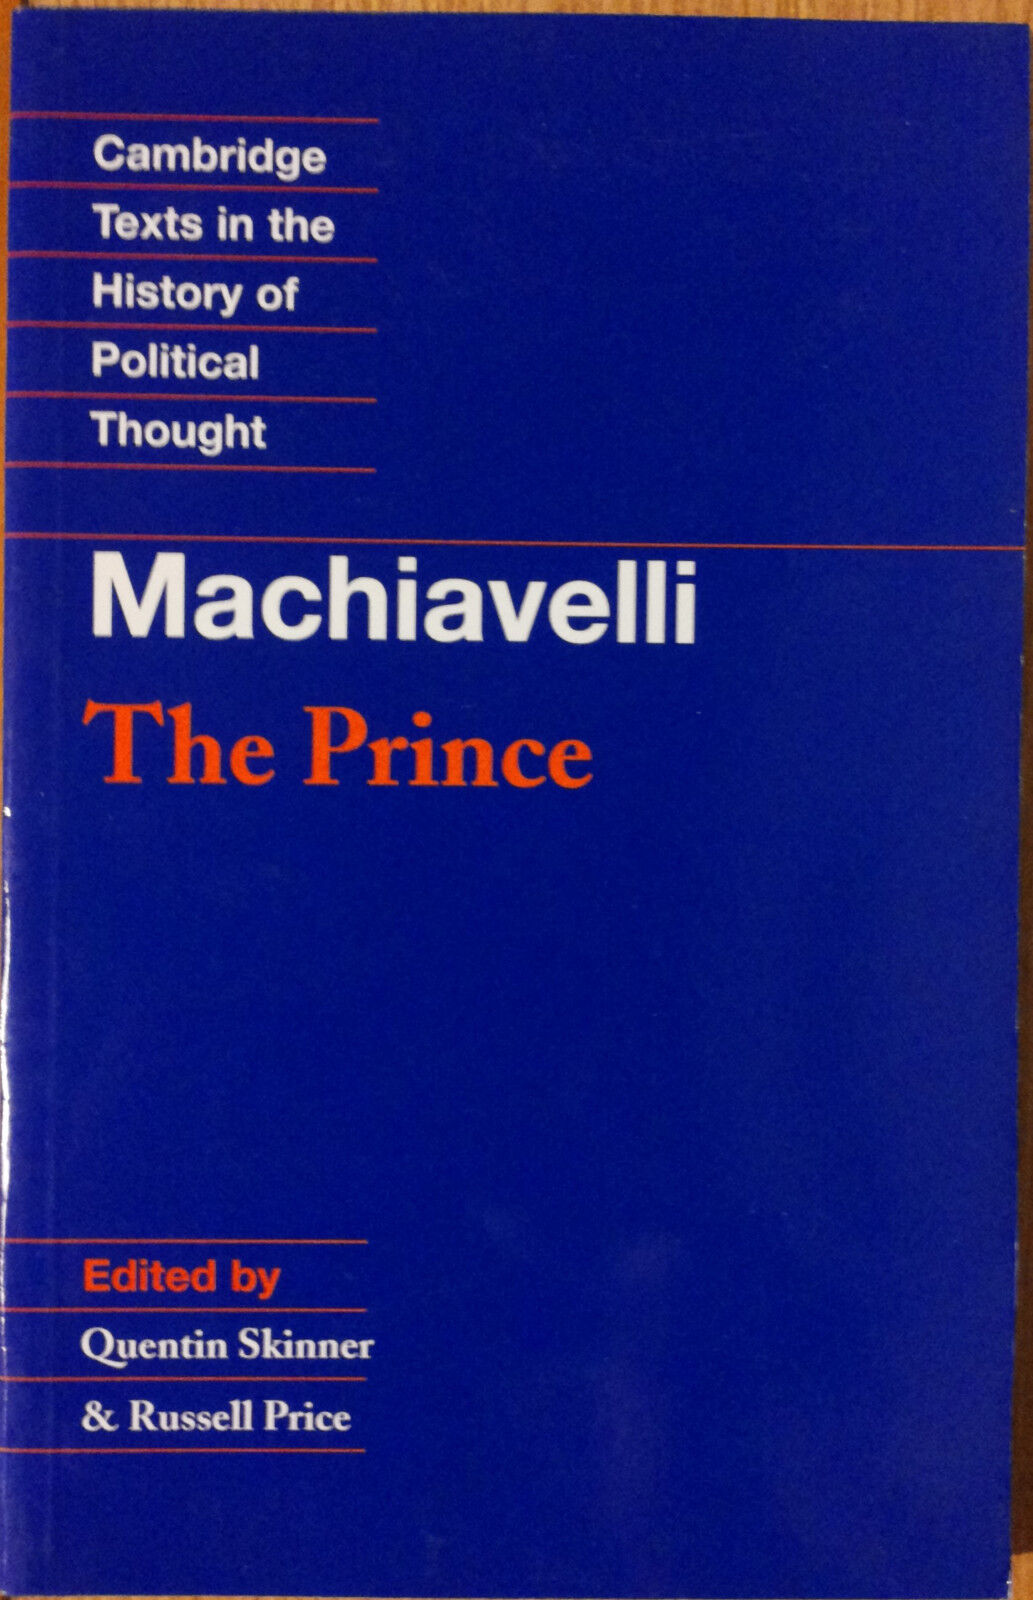 Machiavelli: The Prince - Skinner, Price - Cambridge University Press,2014 - R